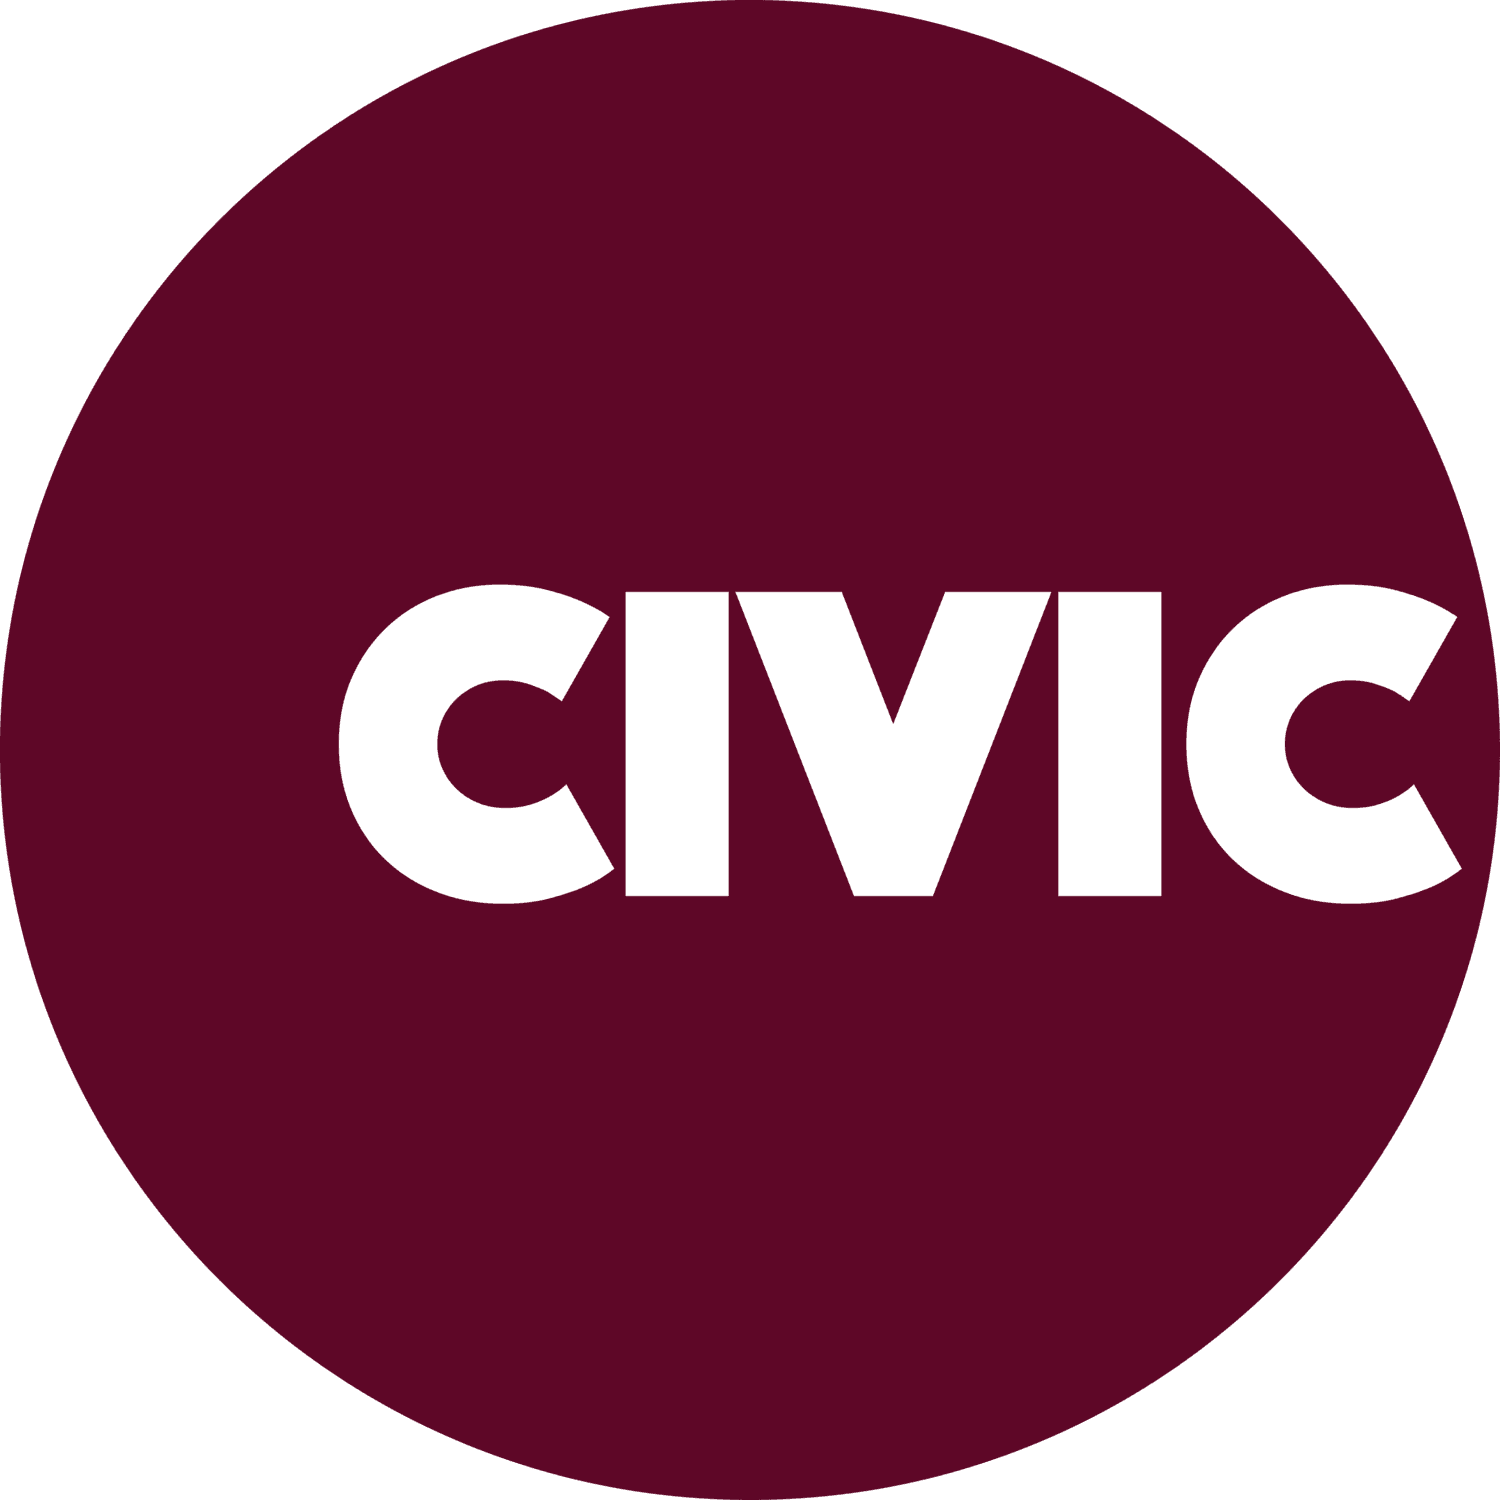 Civic Companies logo.png